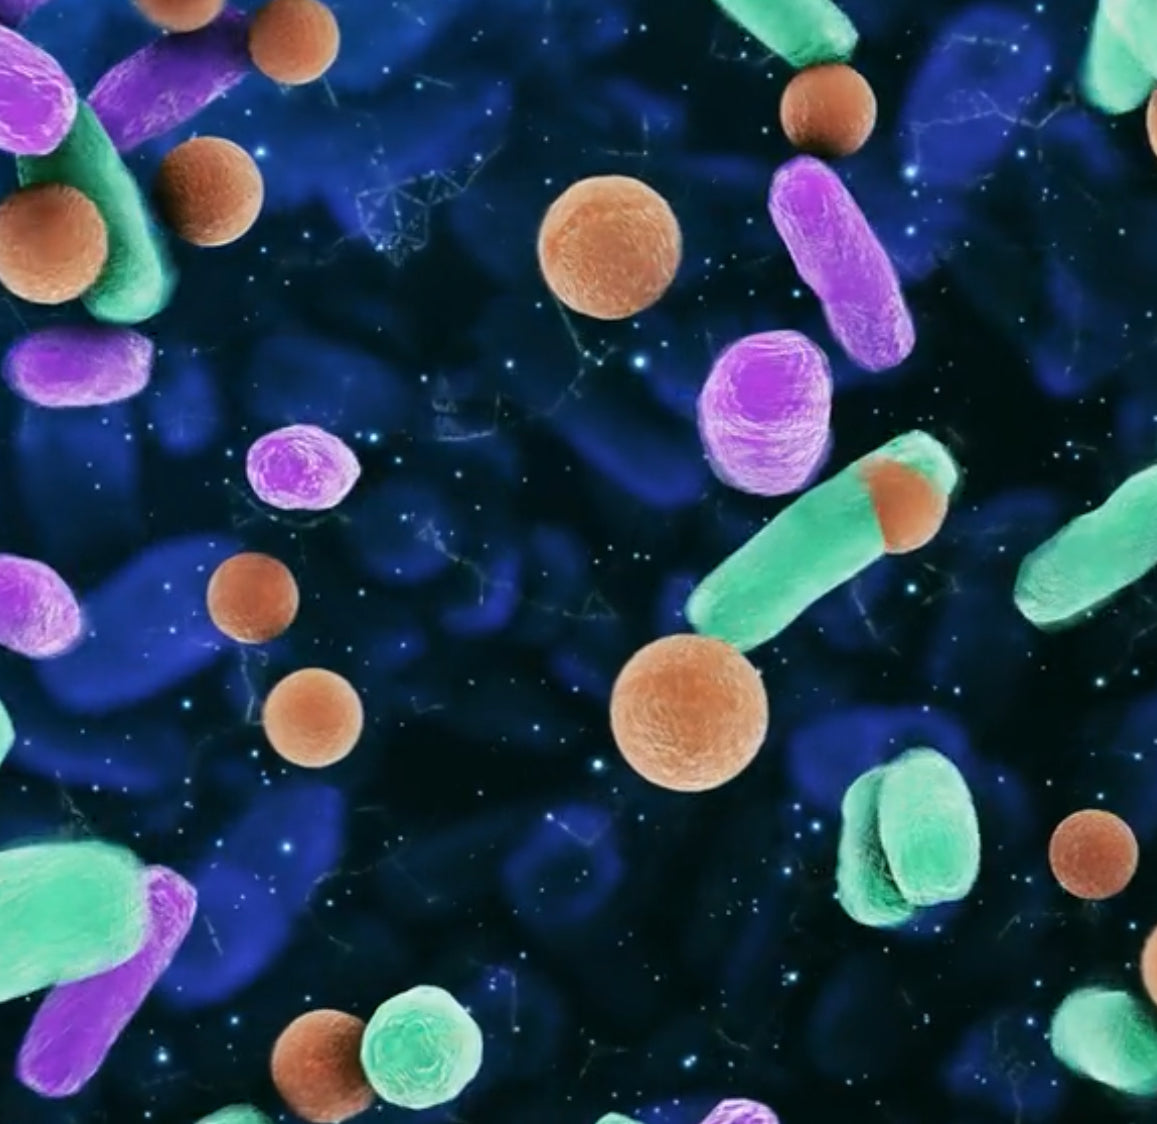 < 50 Billion live bacteria per capsule